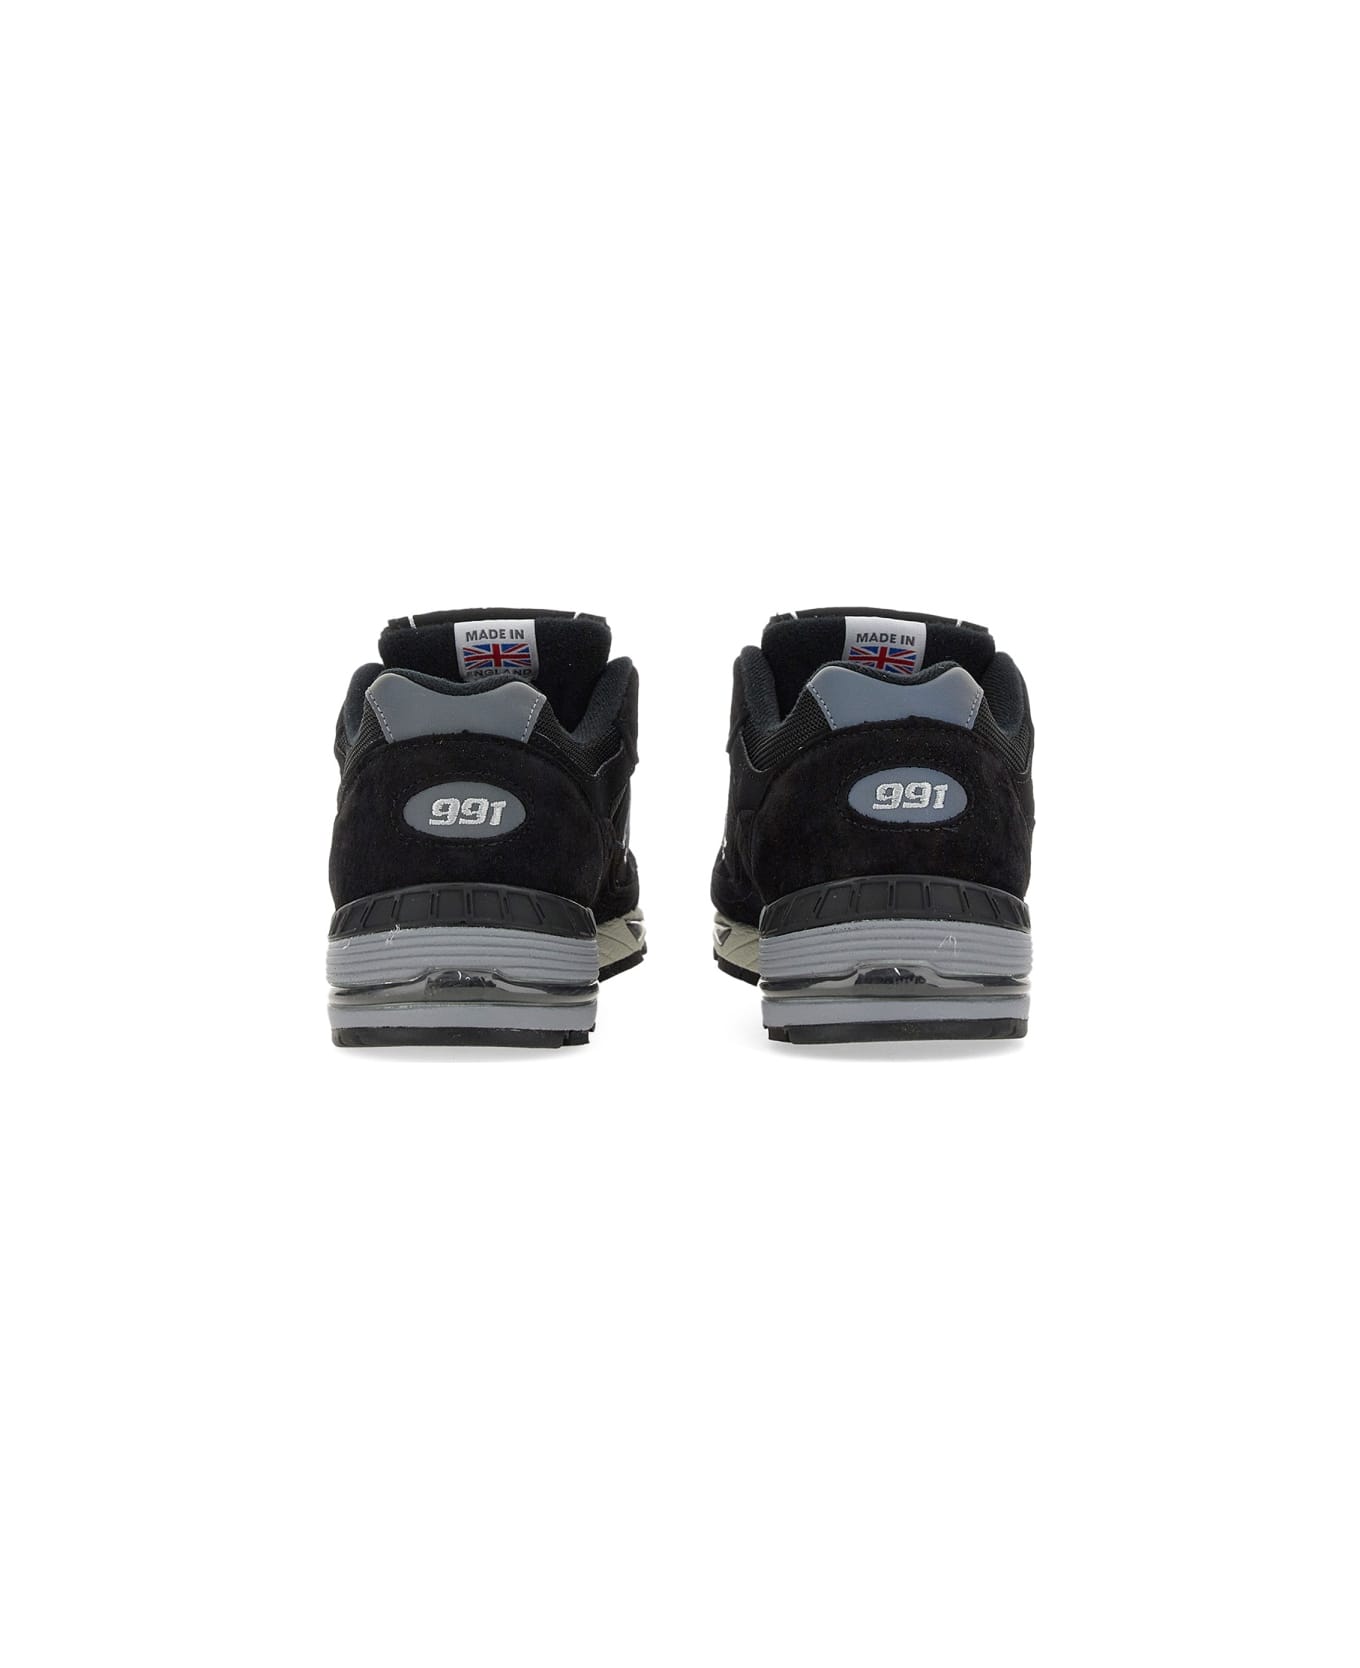 New Balance Sneaker "991" - BLACK